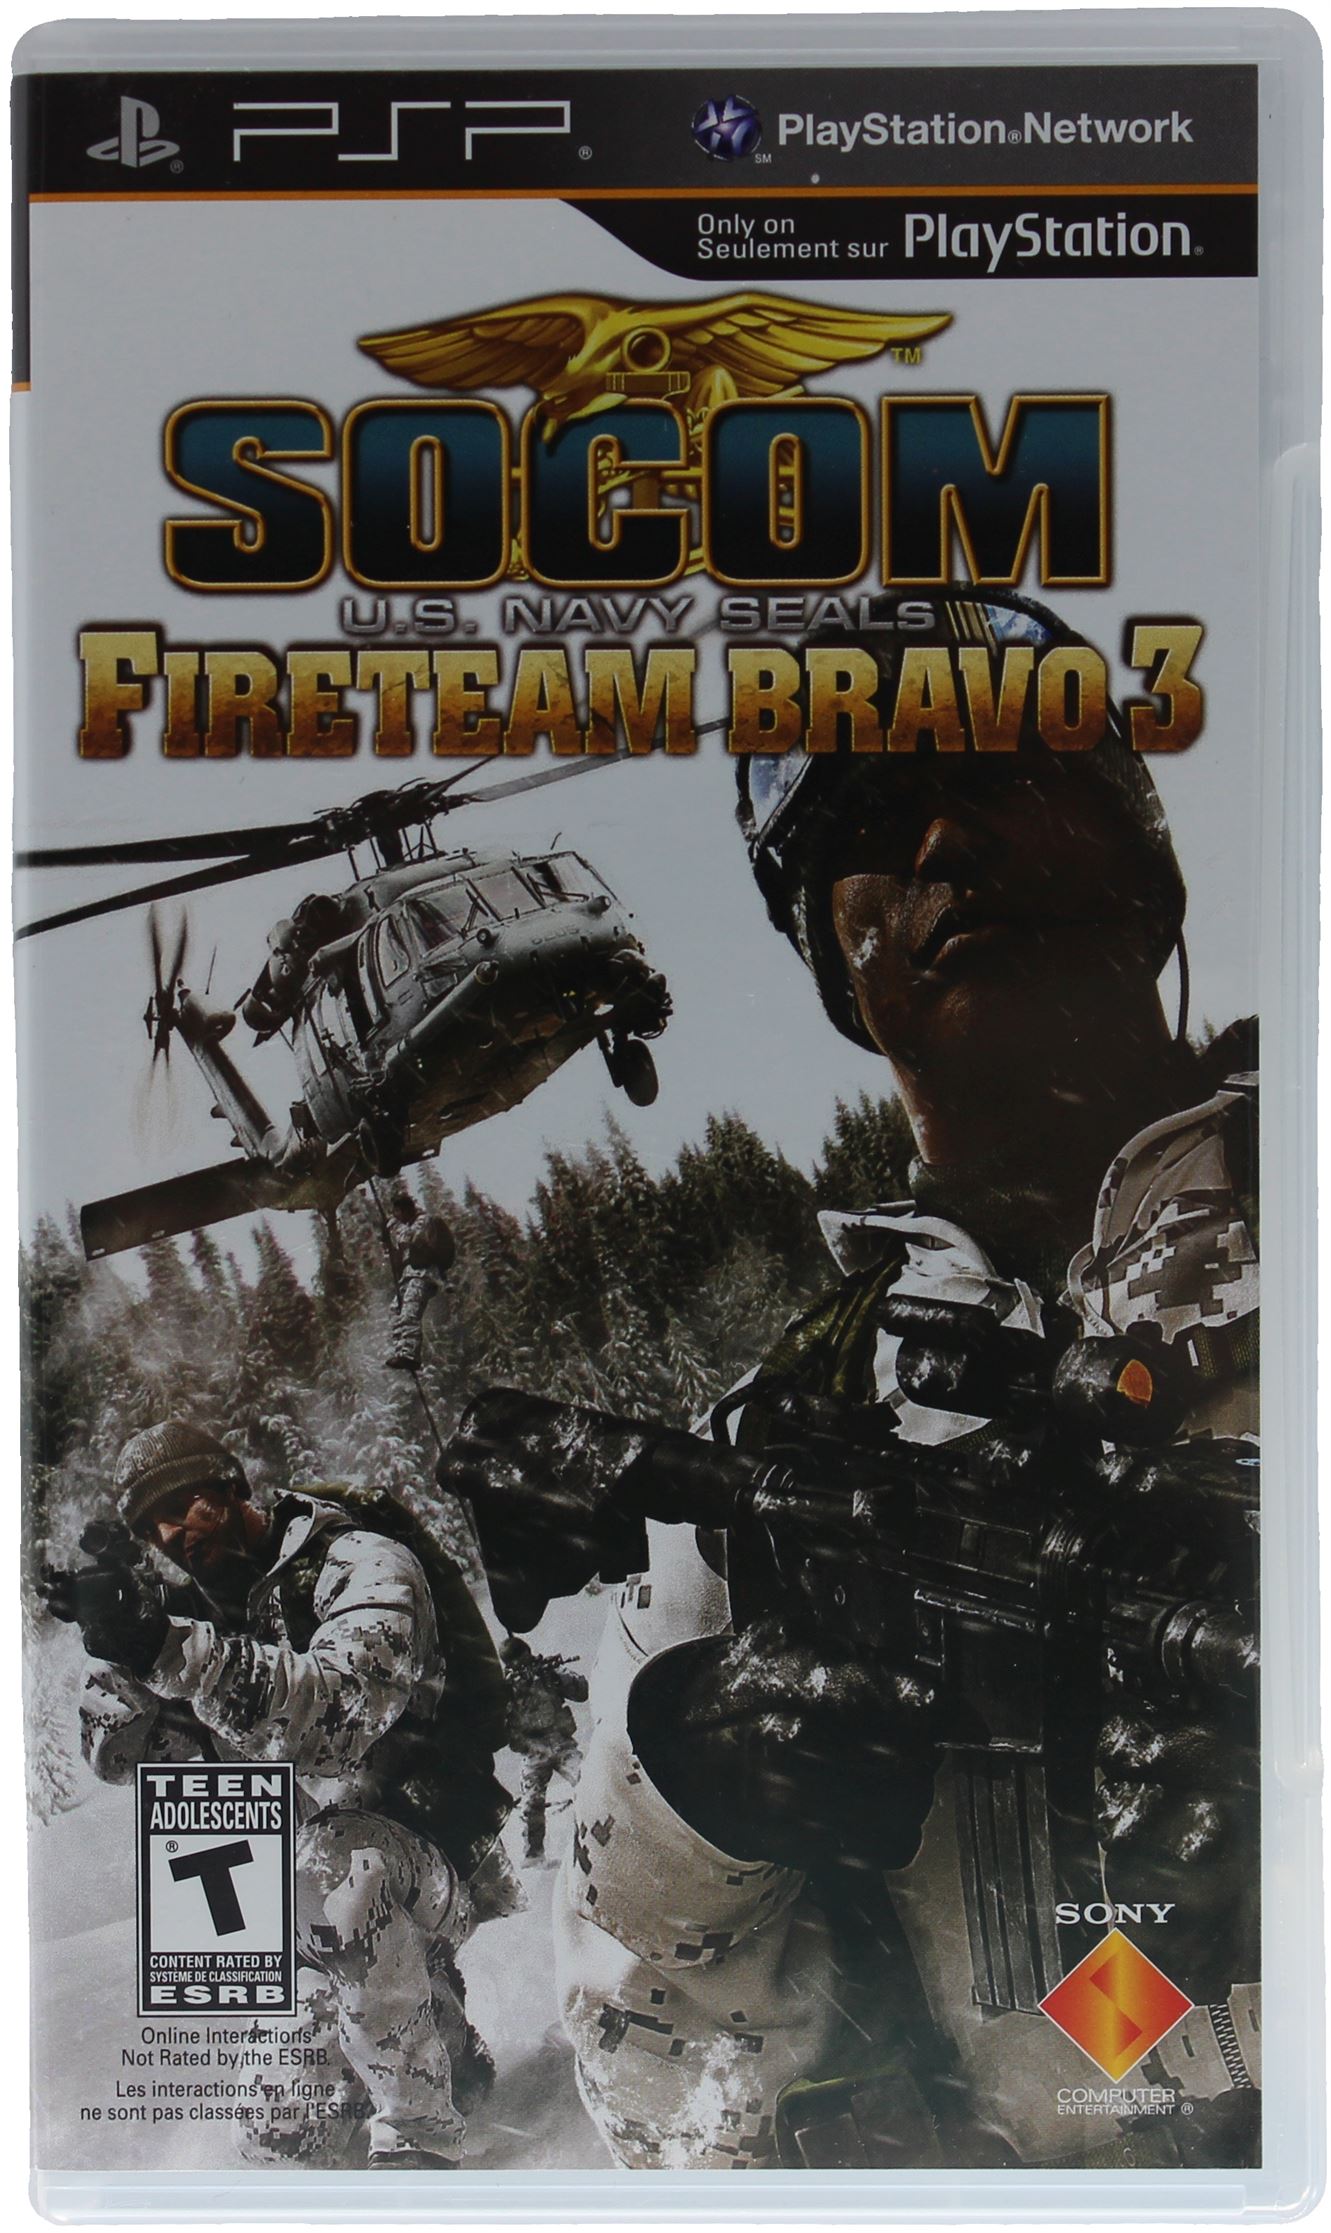 SOCOM US Navy Seals Fireteam Bravo 2 (Playstation Portable / PSP